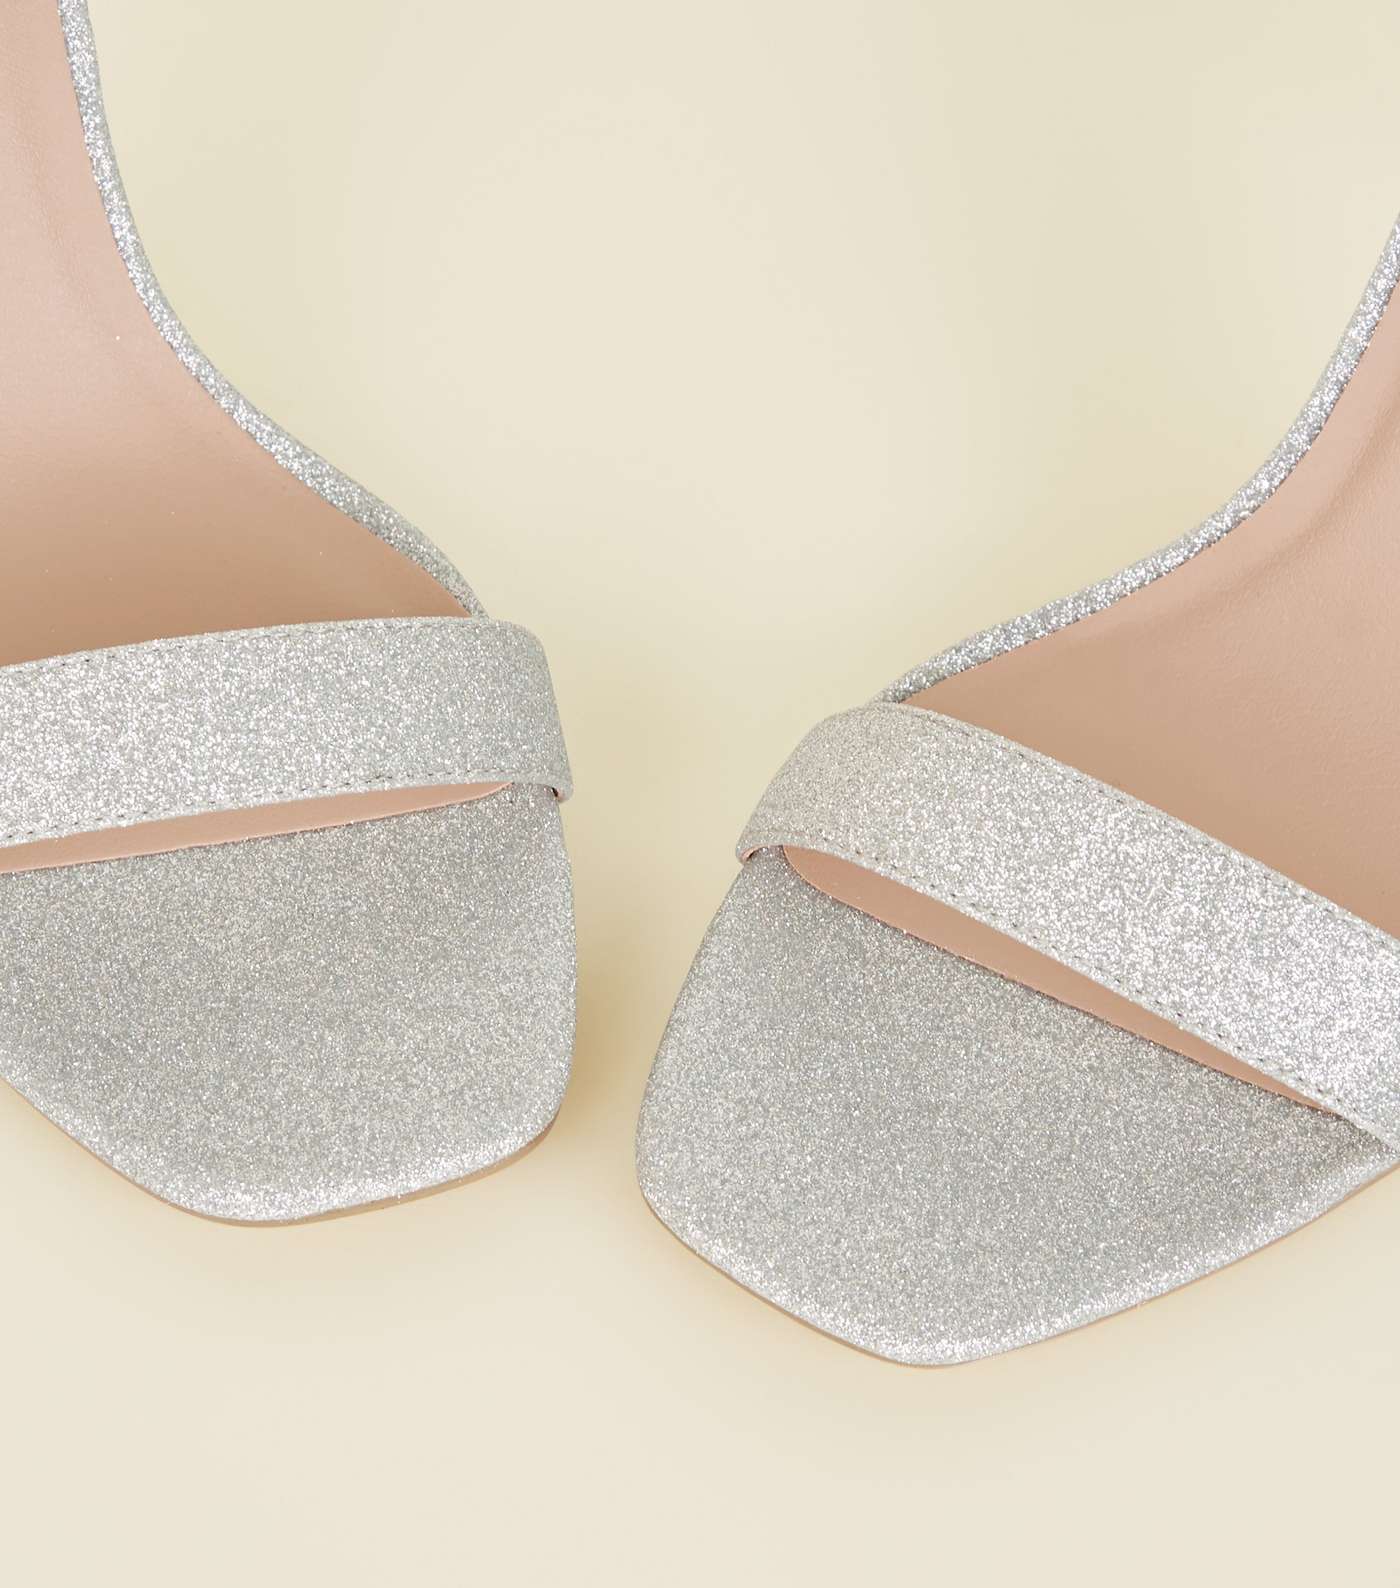 Wide Fit Silver Glitter Stiletto Heel Sandals Image 3